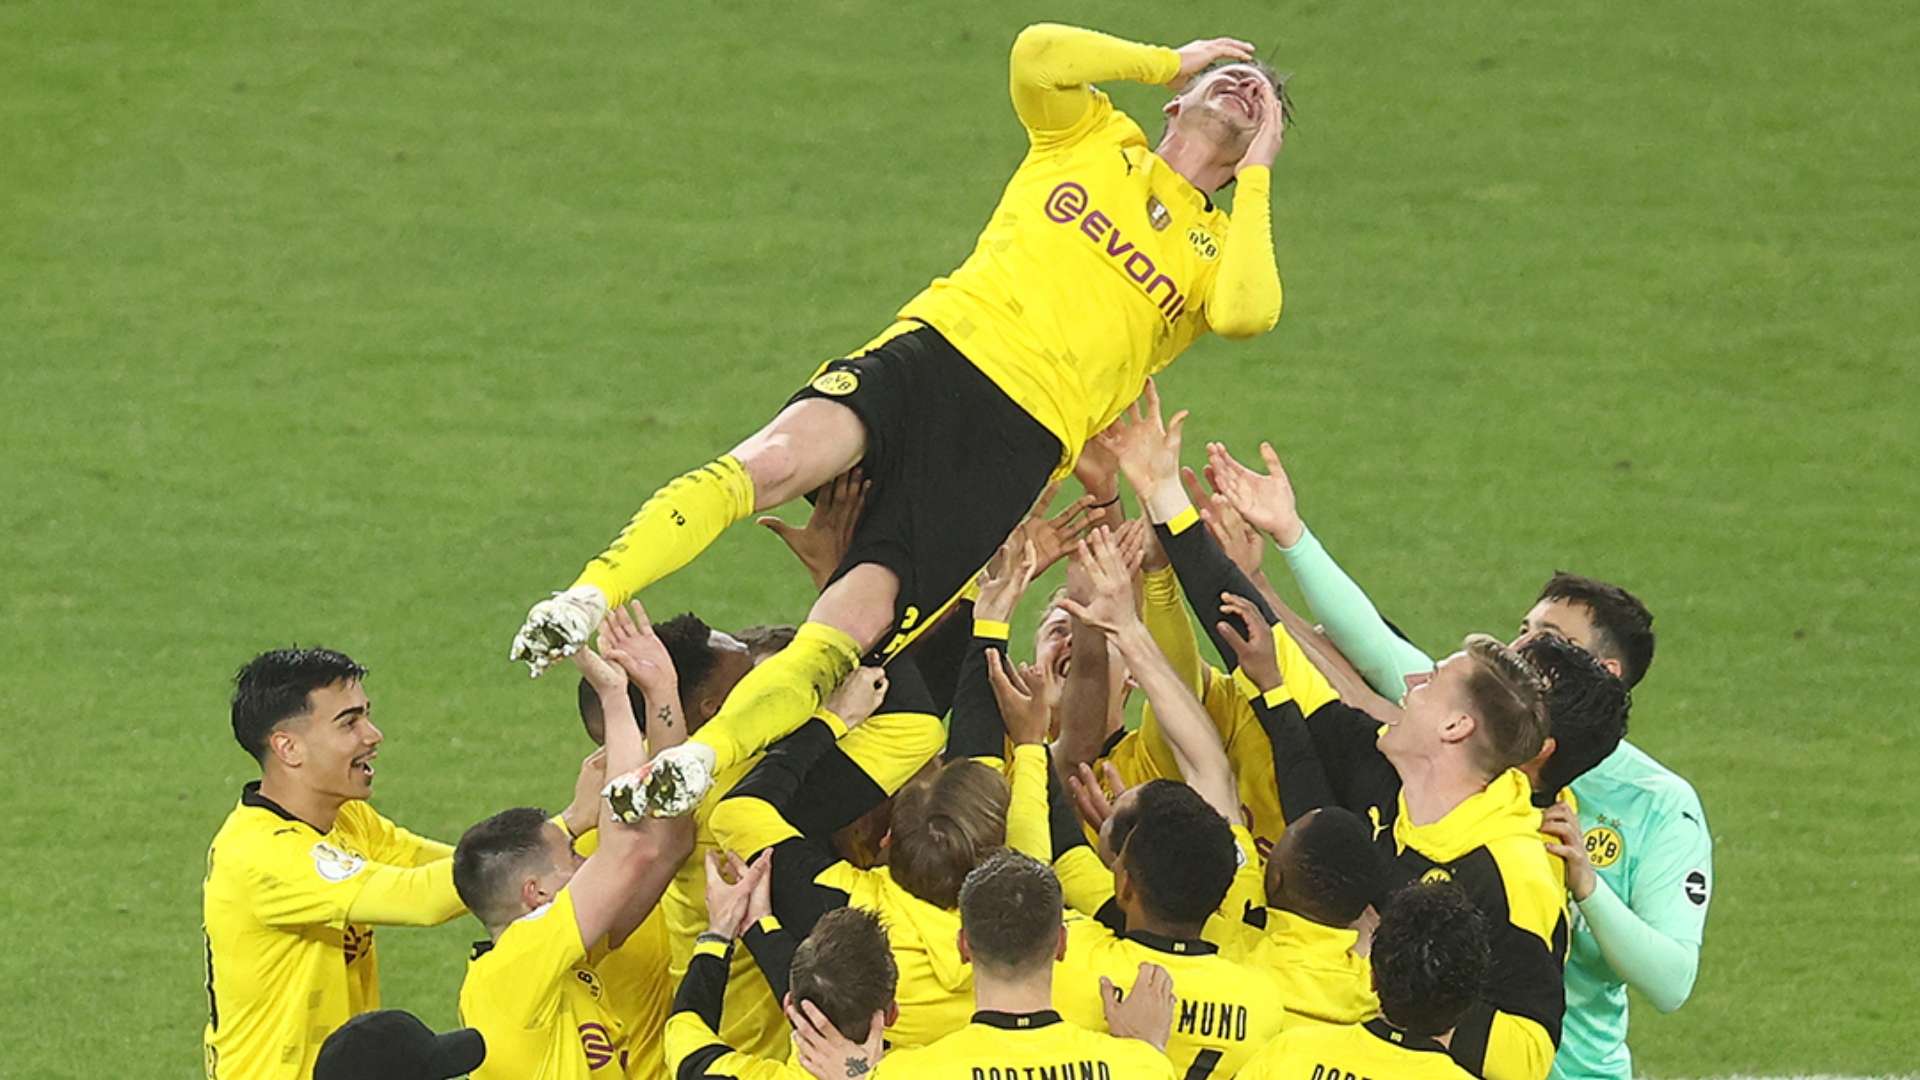 adiós de Piszczek Borussia Dortmund campeón de la Pokal 2021